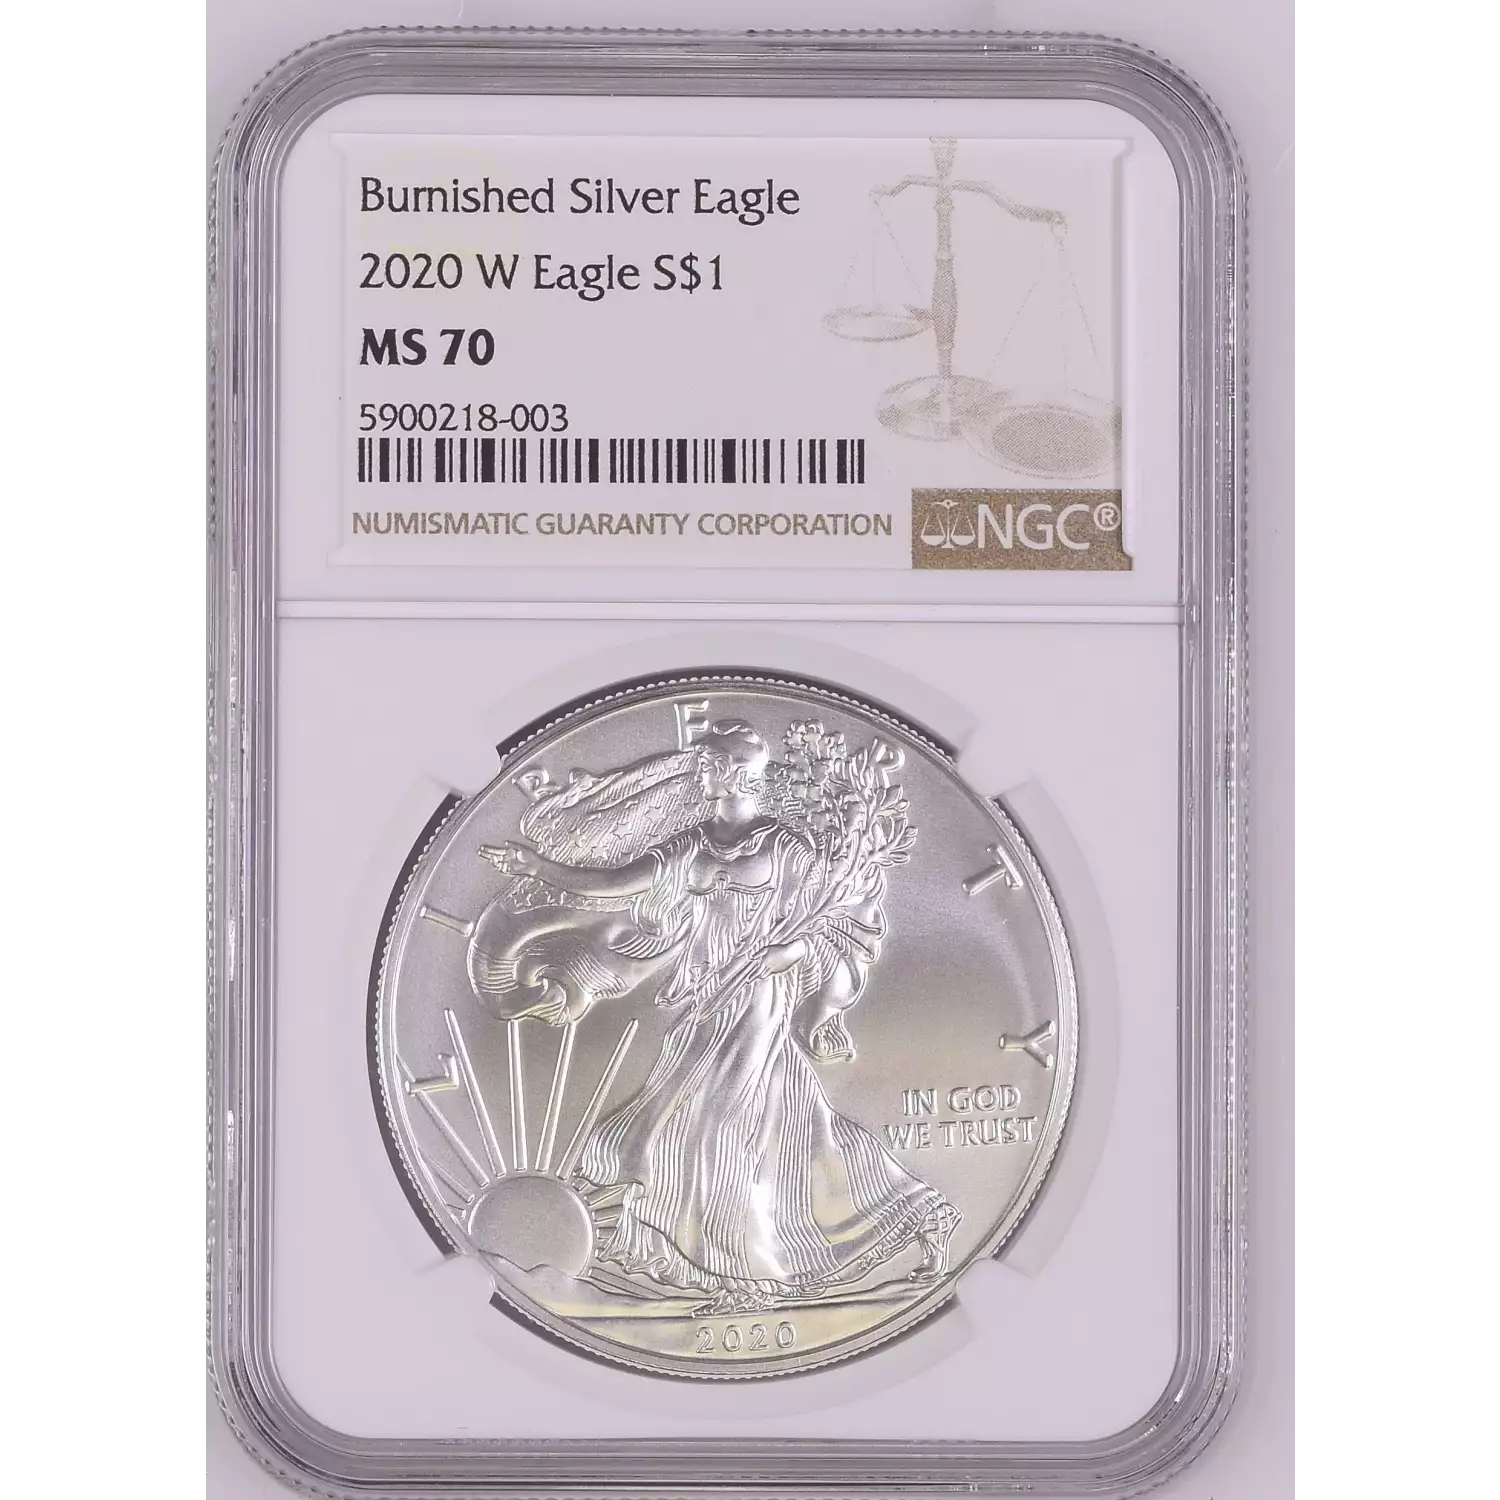 2020 W Burnished Silver Eagle 